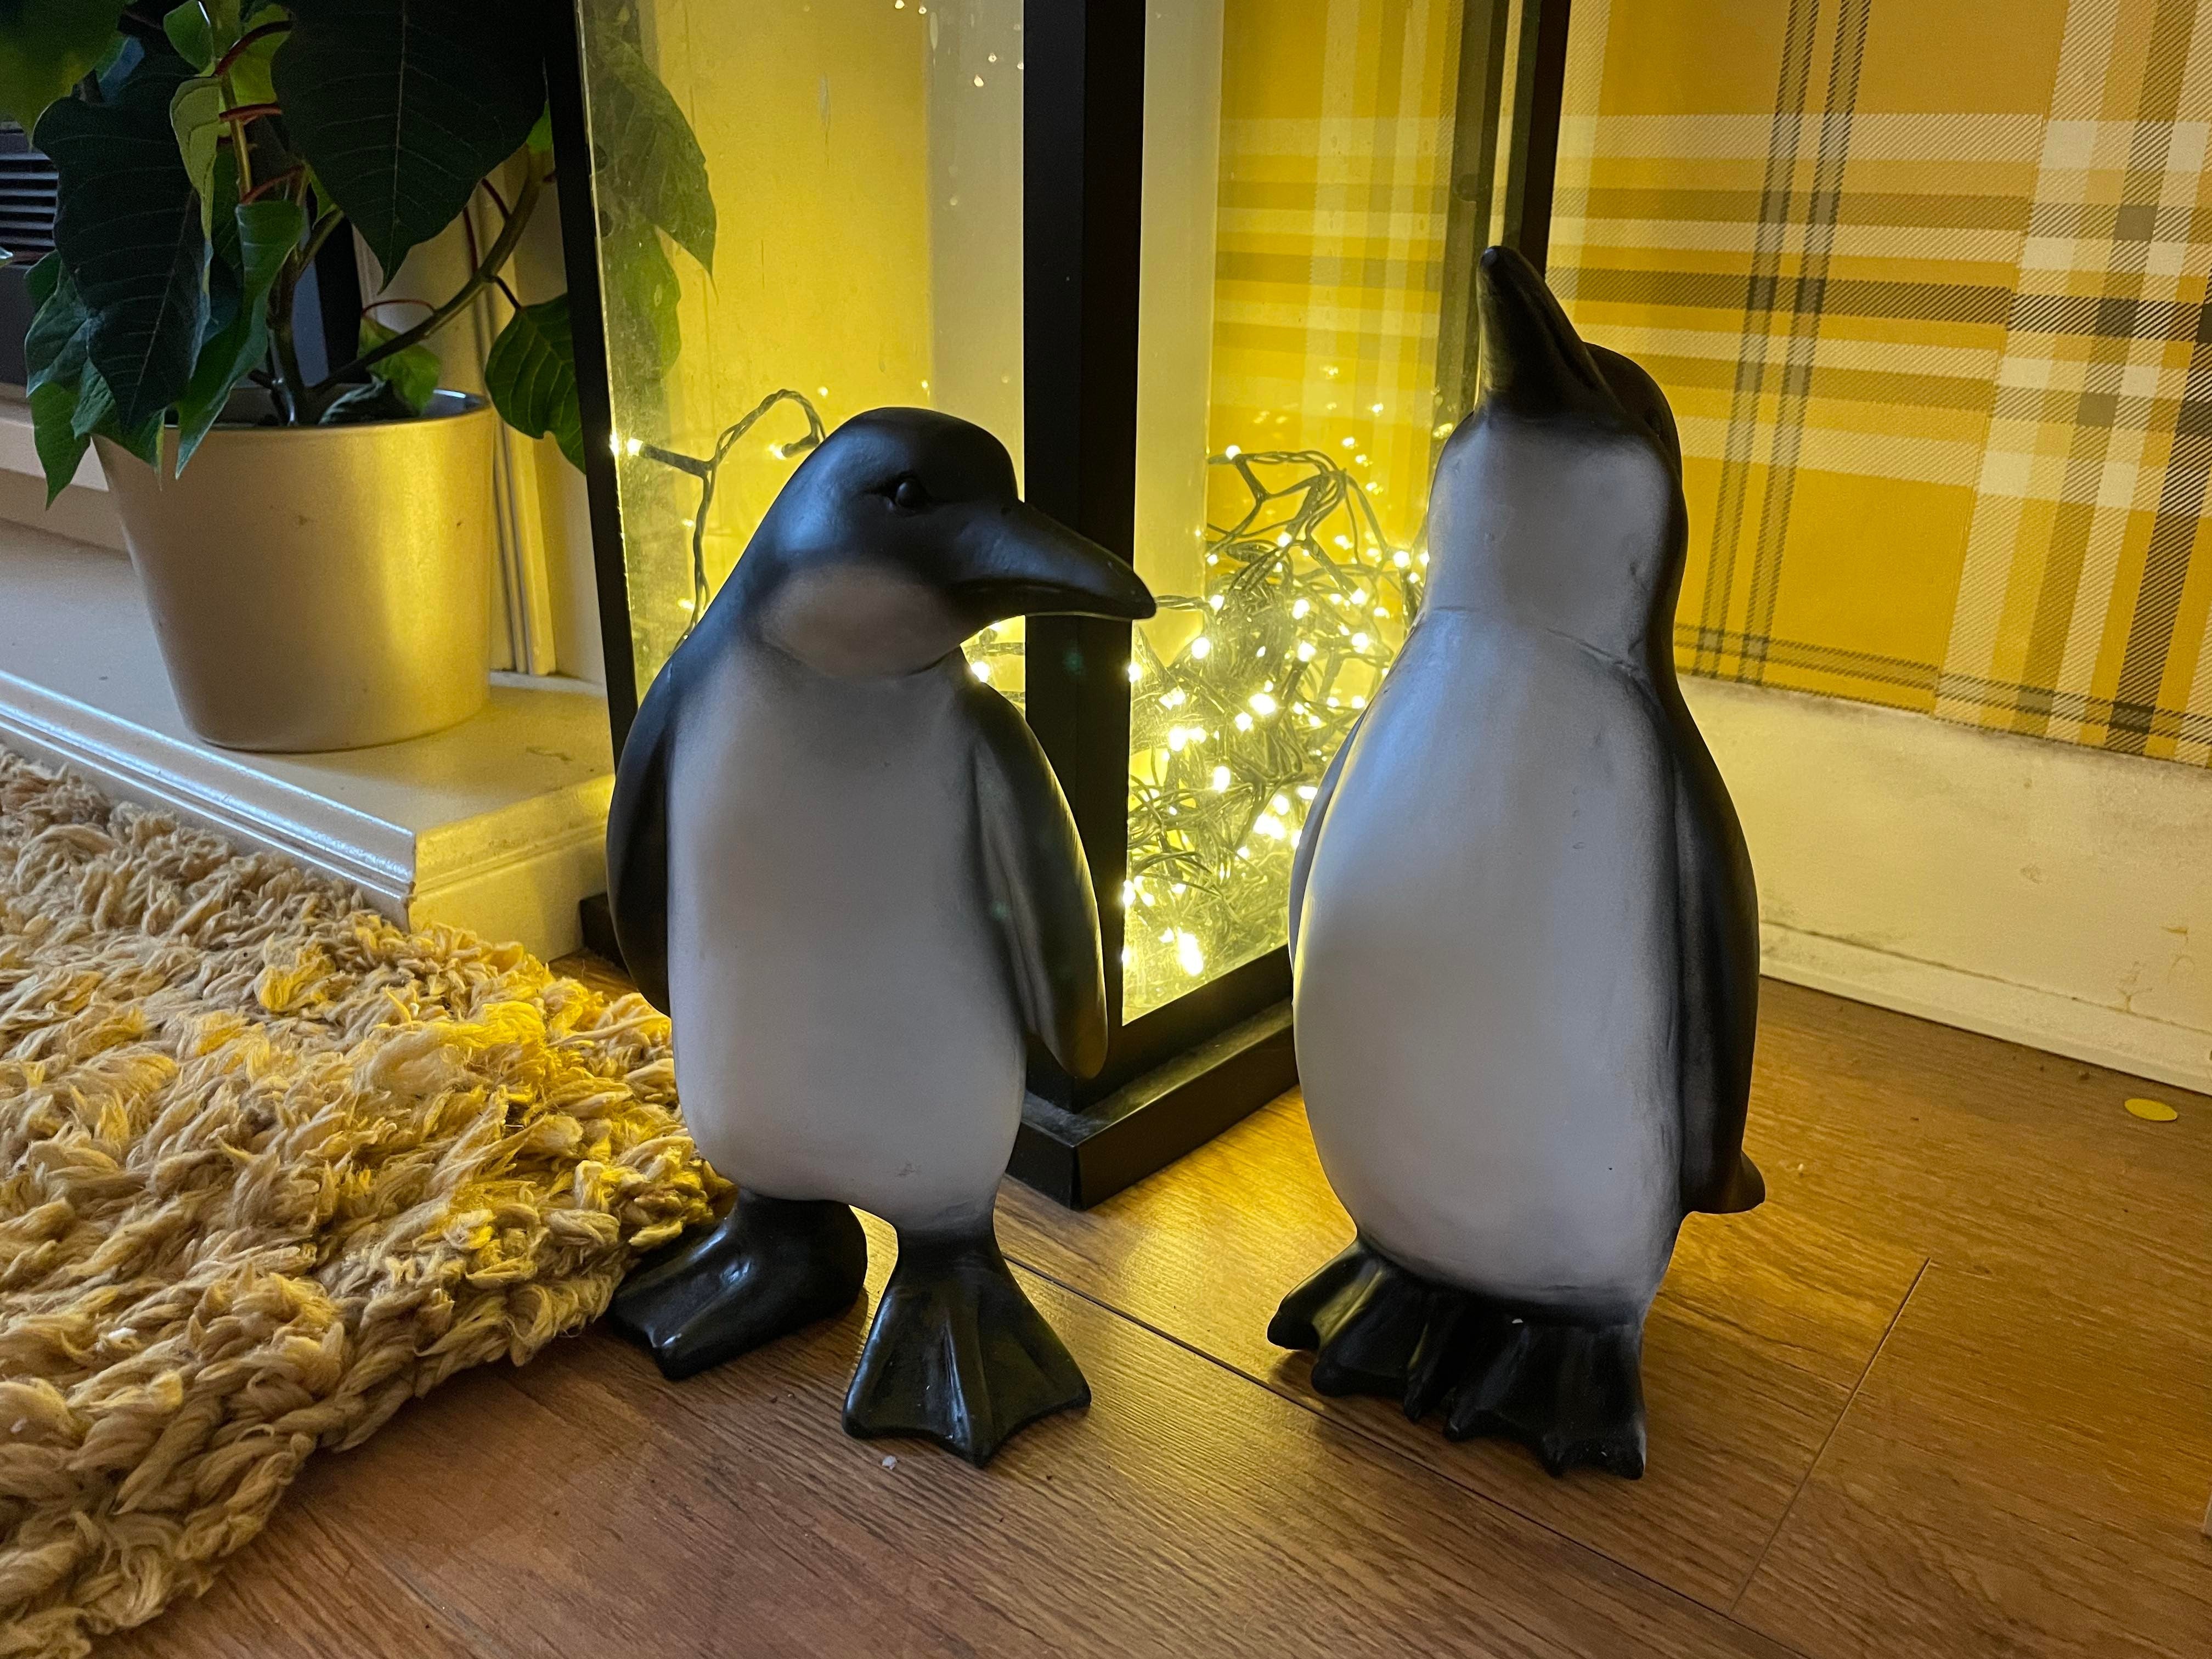 Perky Penguins